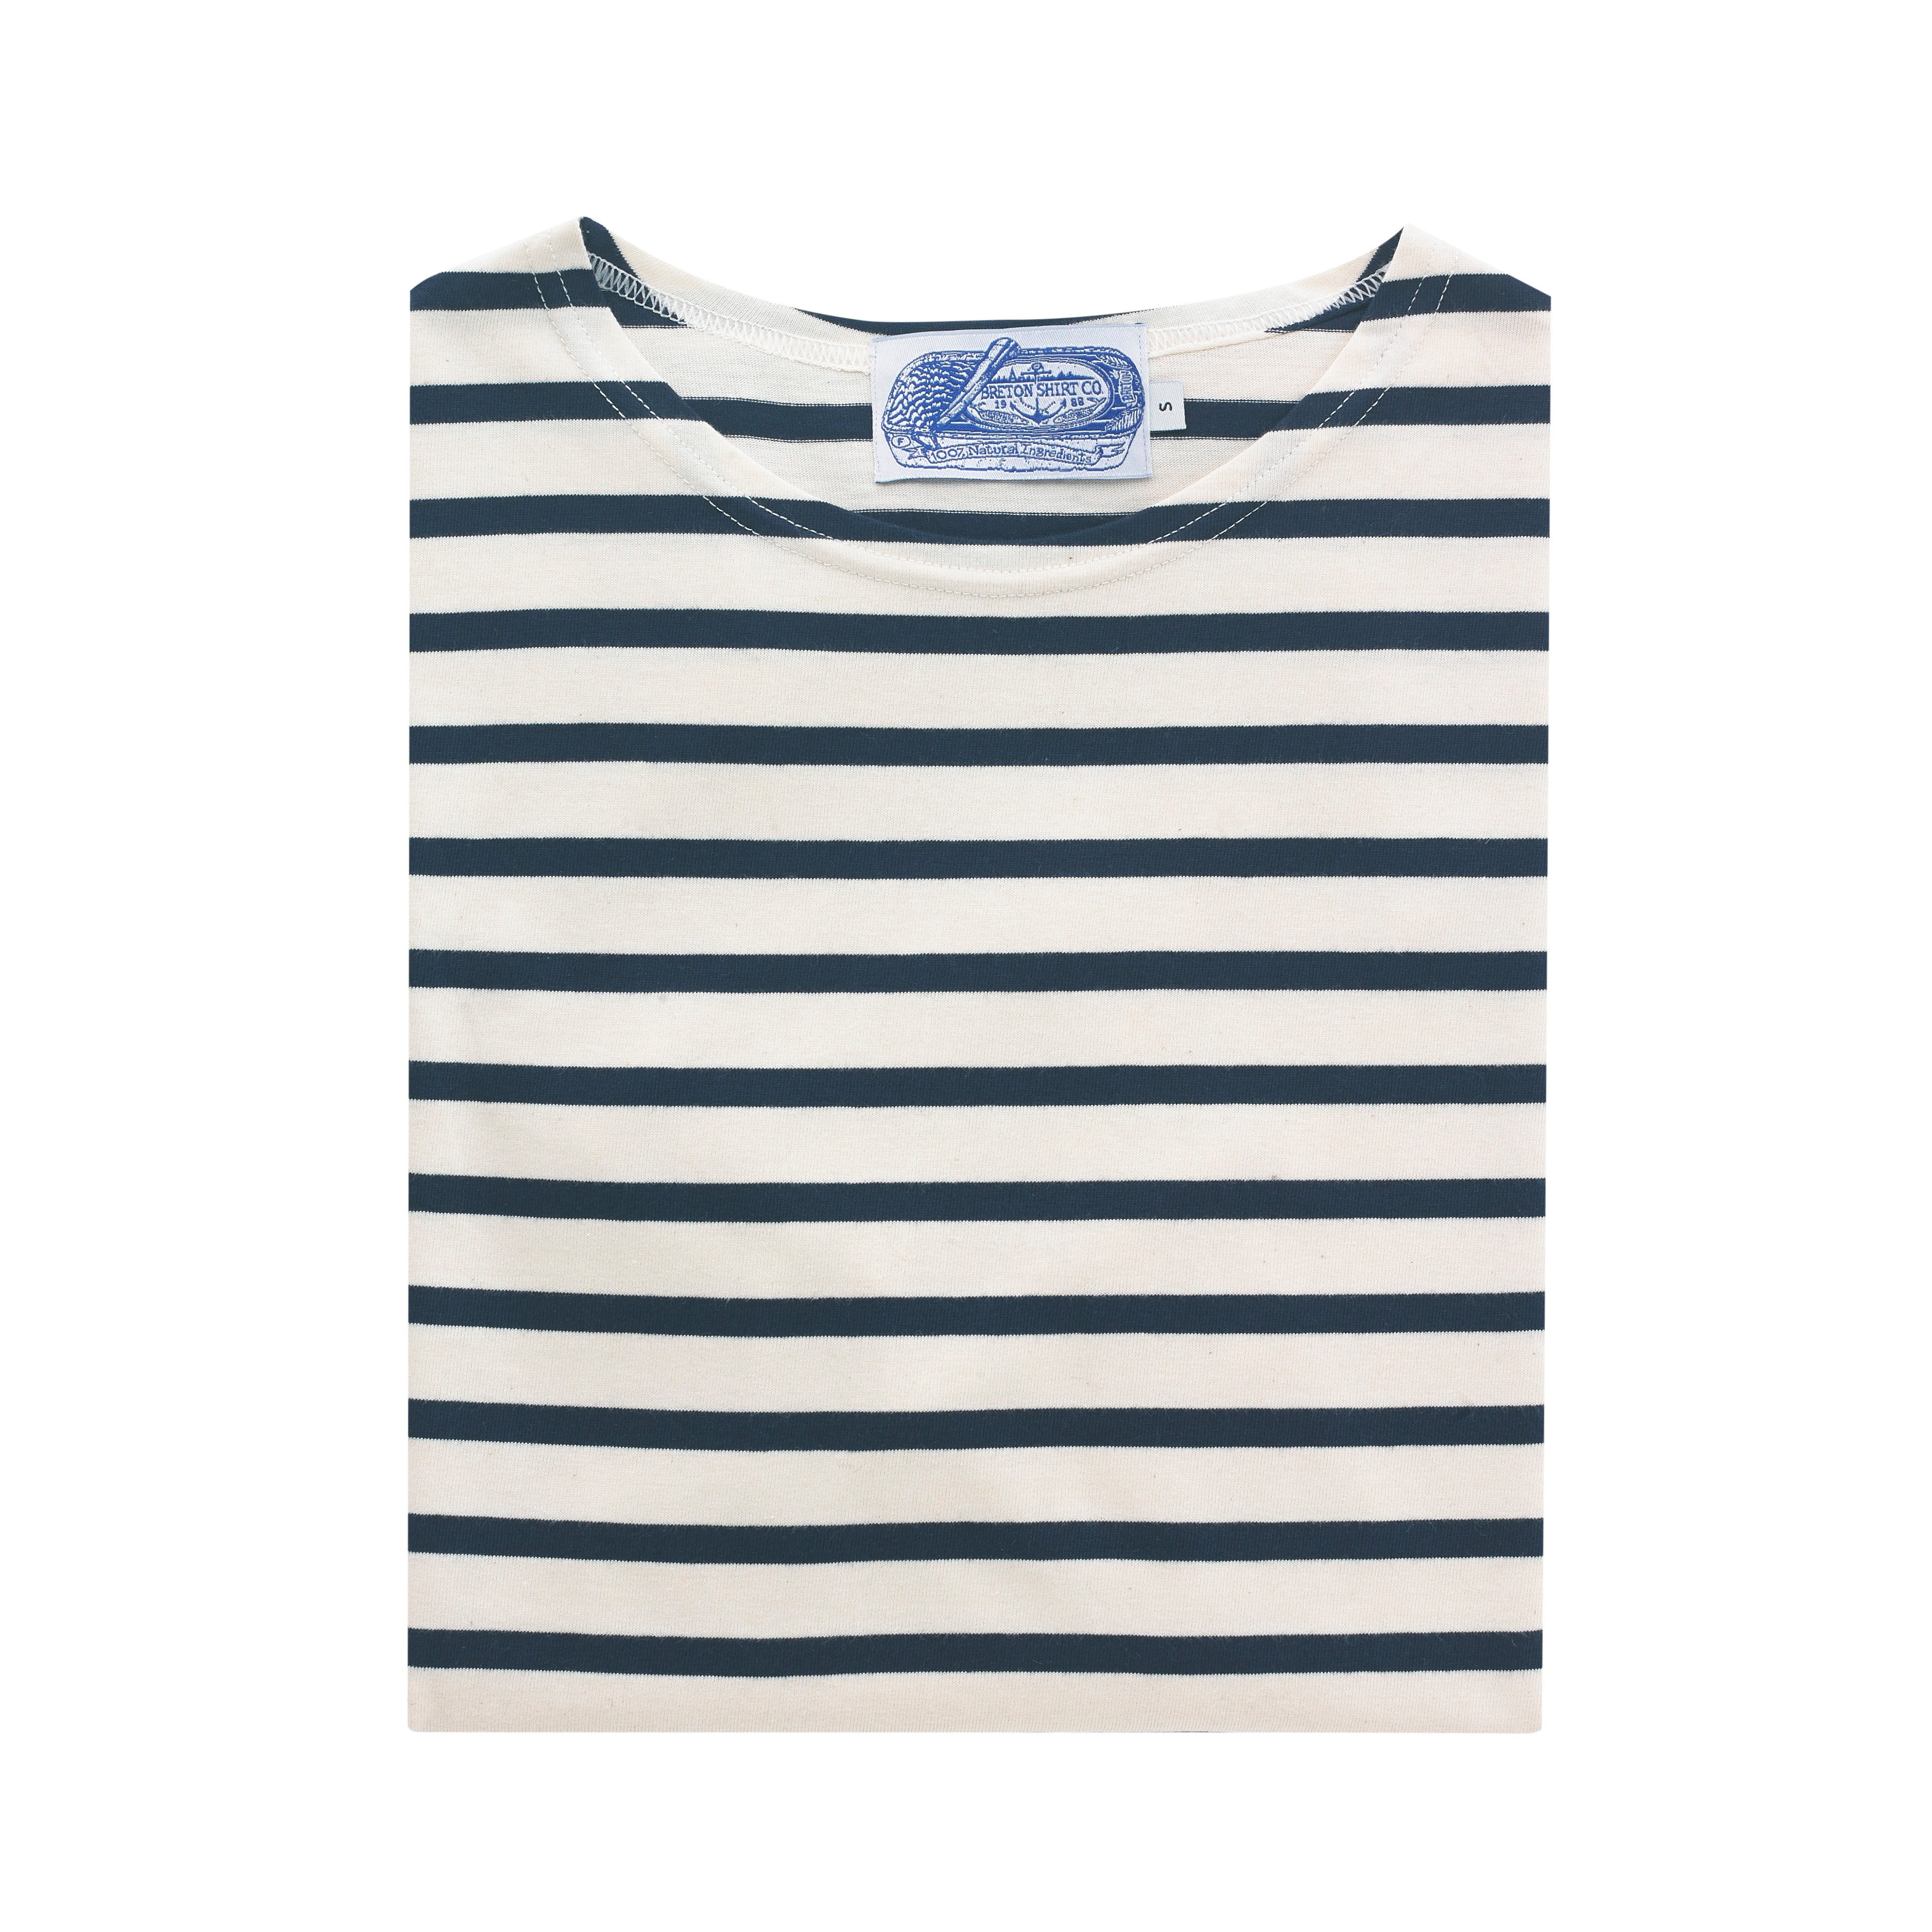 The Original Breton Shirt | Men's Striped French Fishermans Top